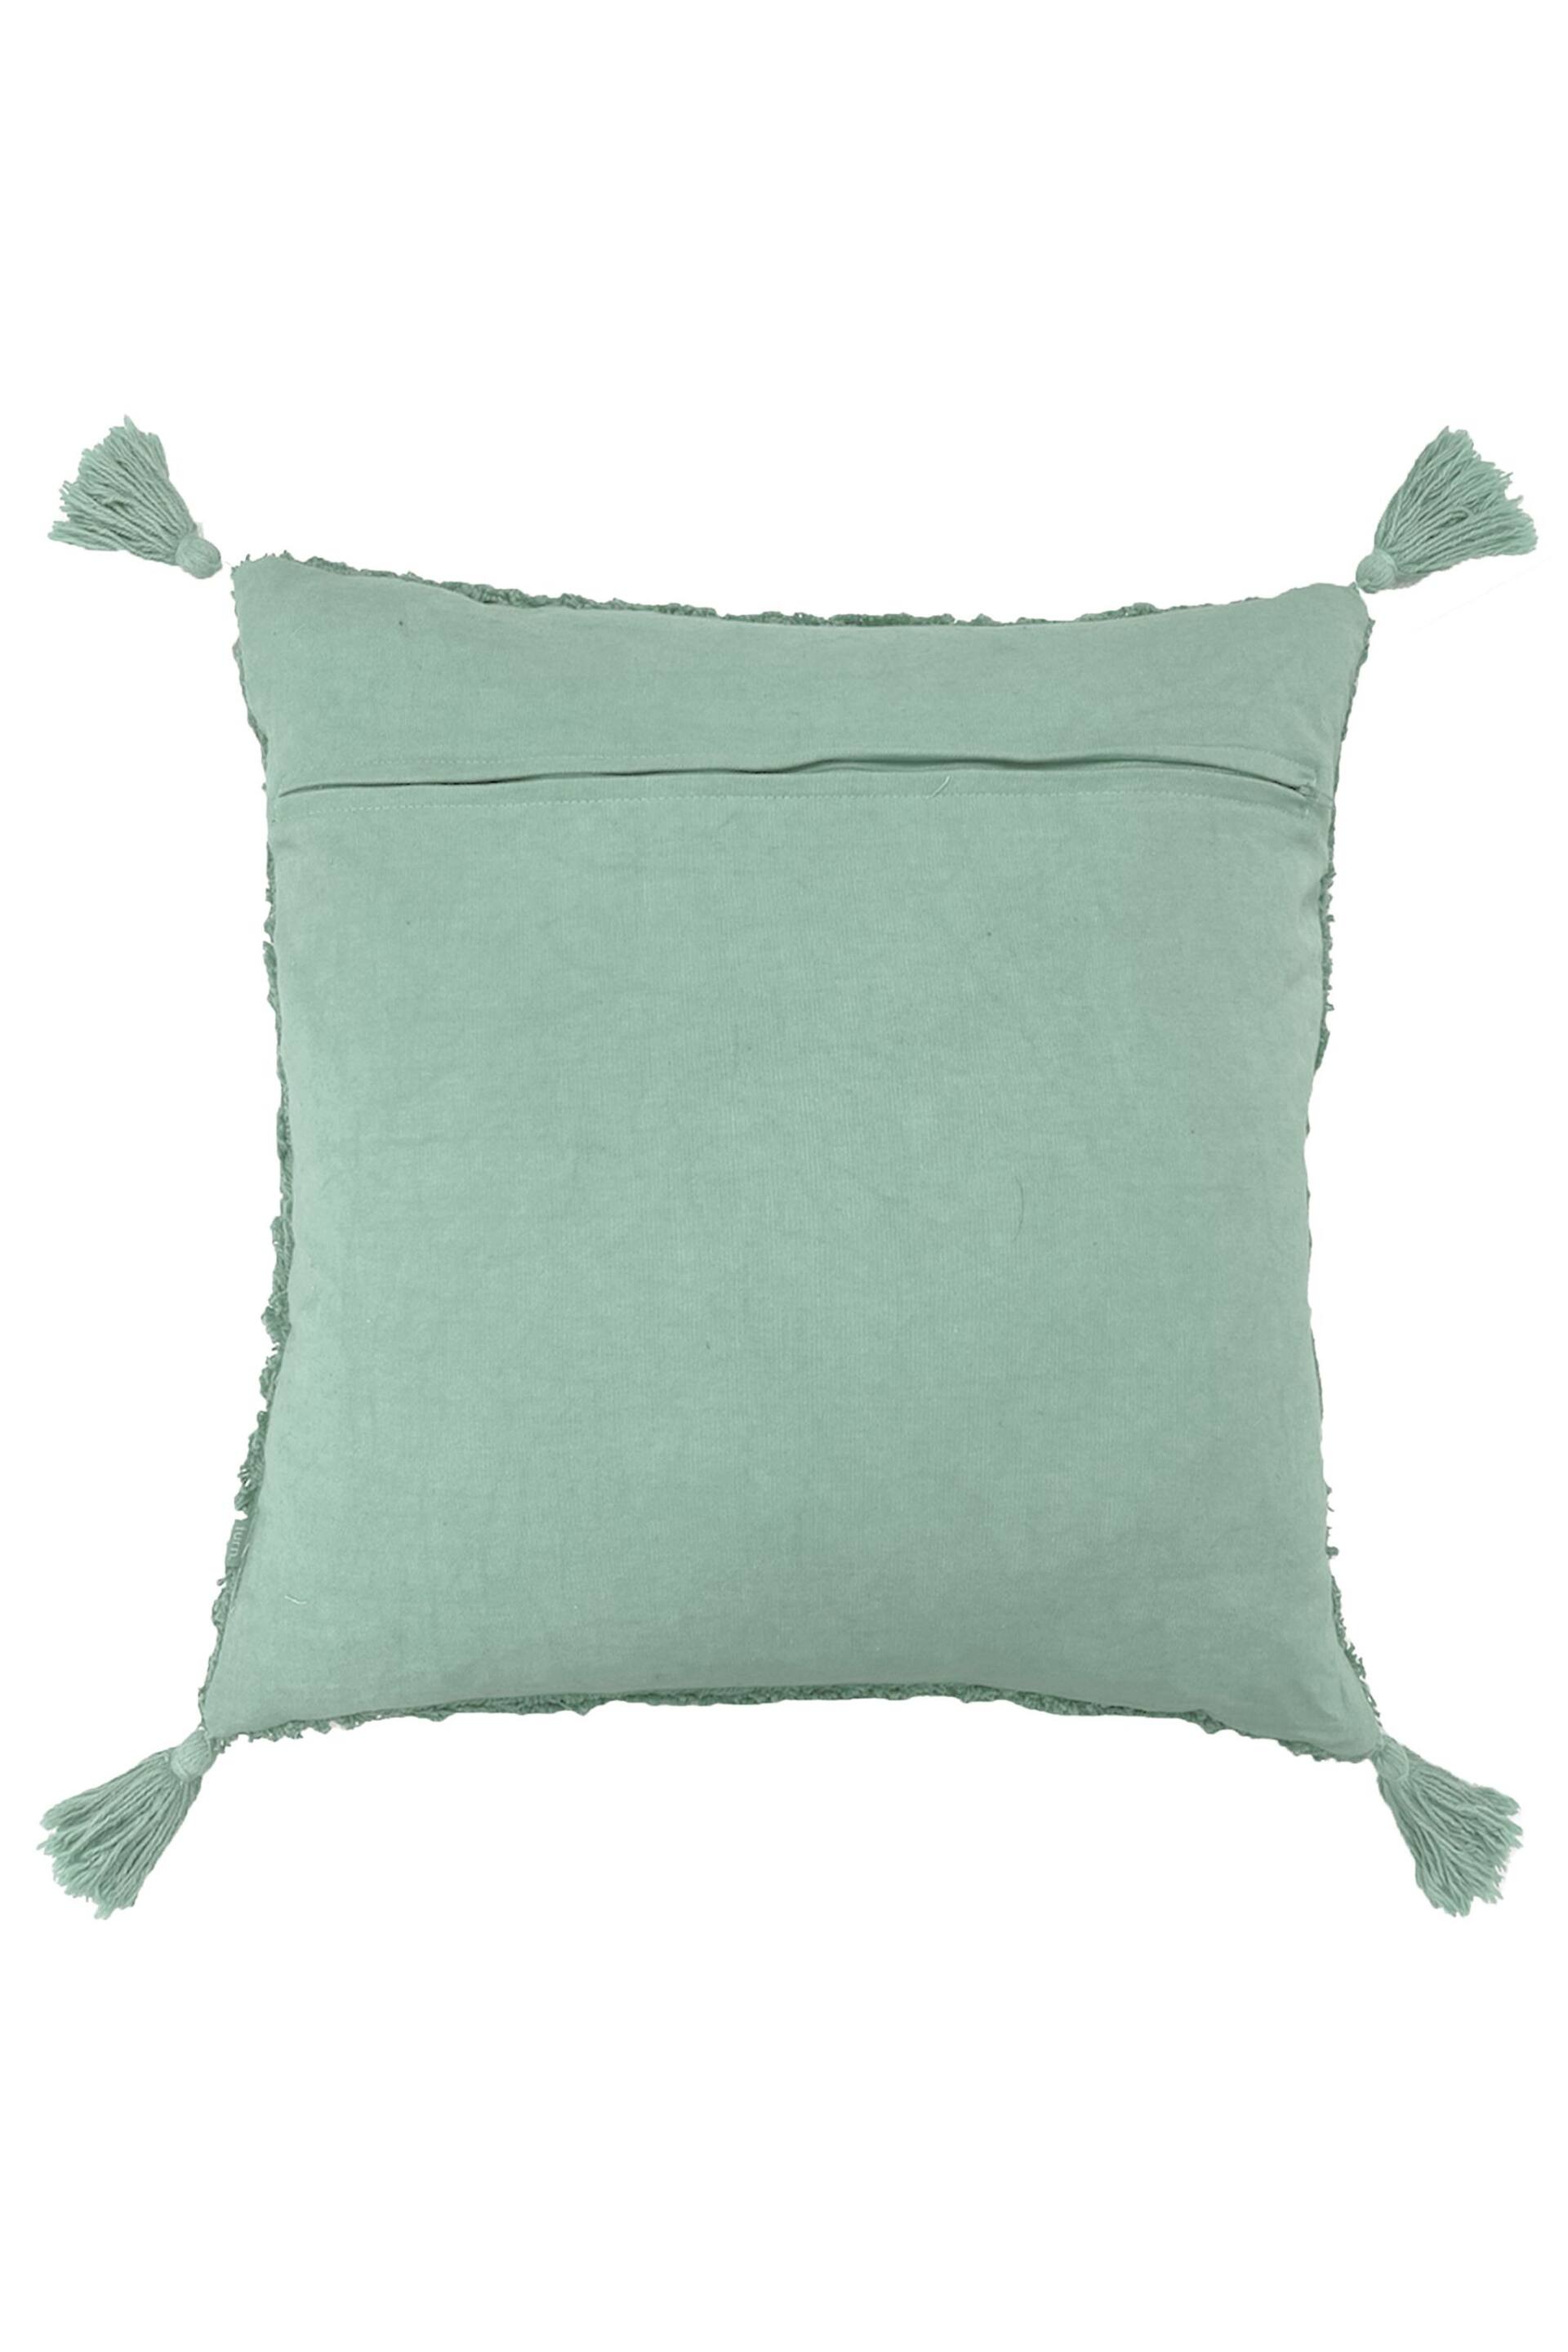 furn. Green Kantha Cushion - Image 3 of 4